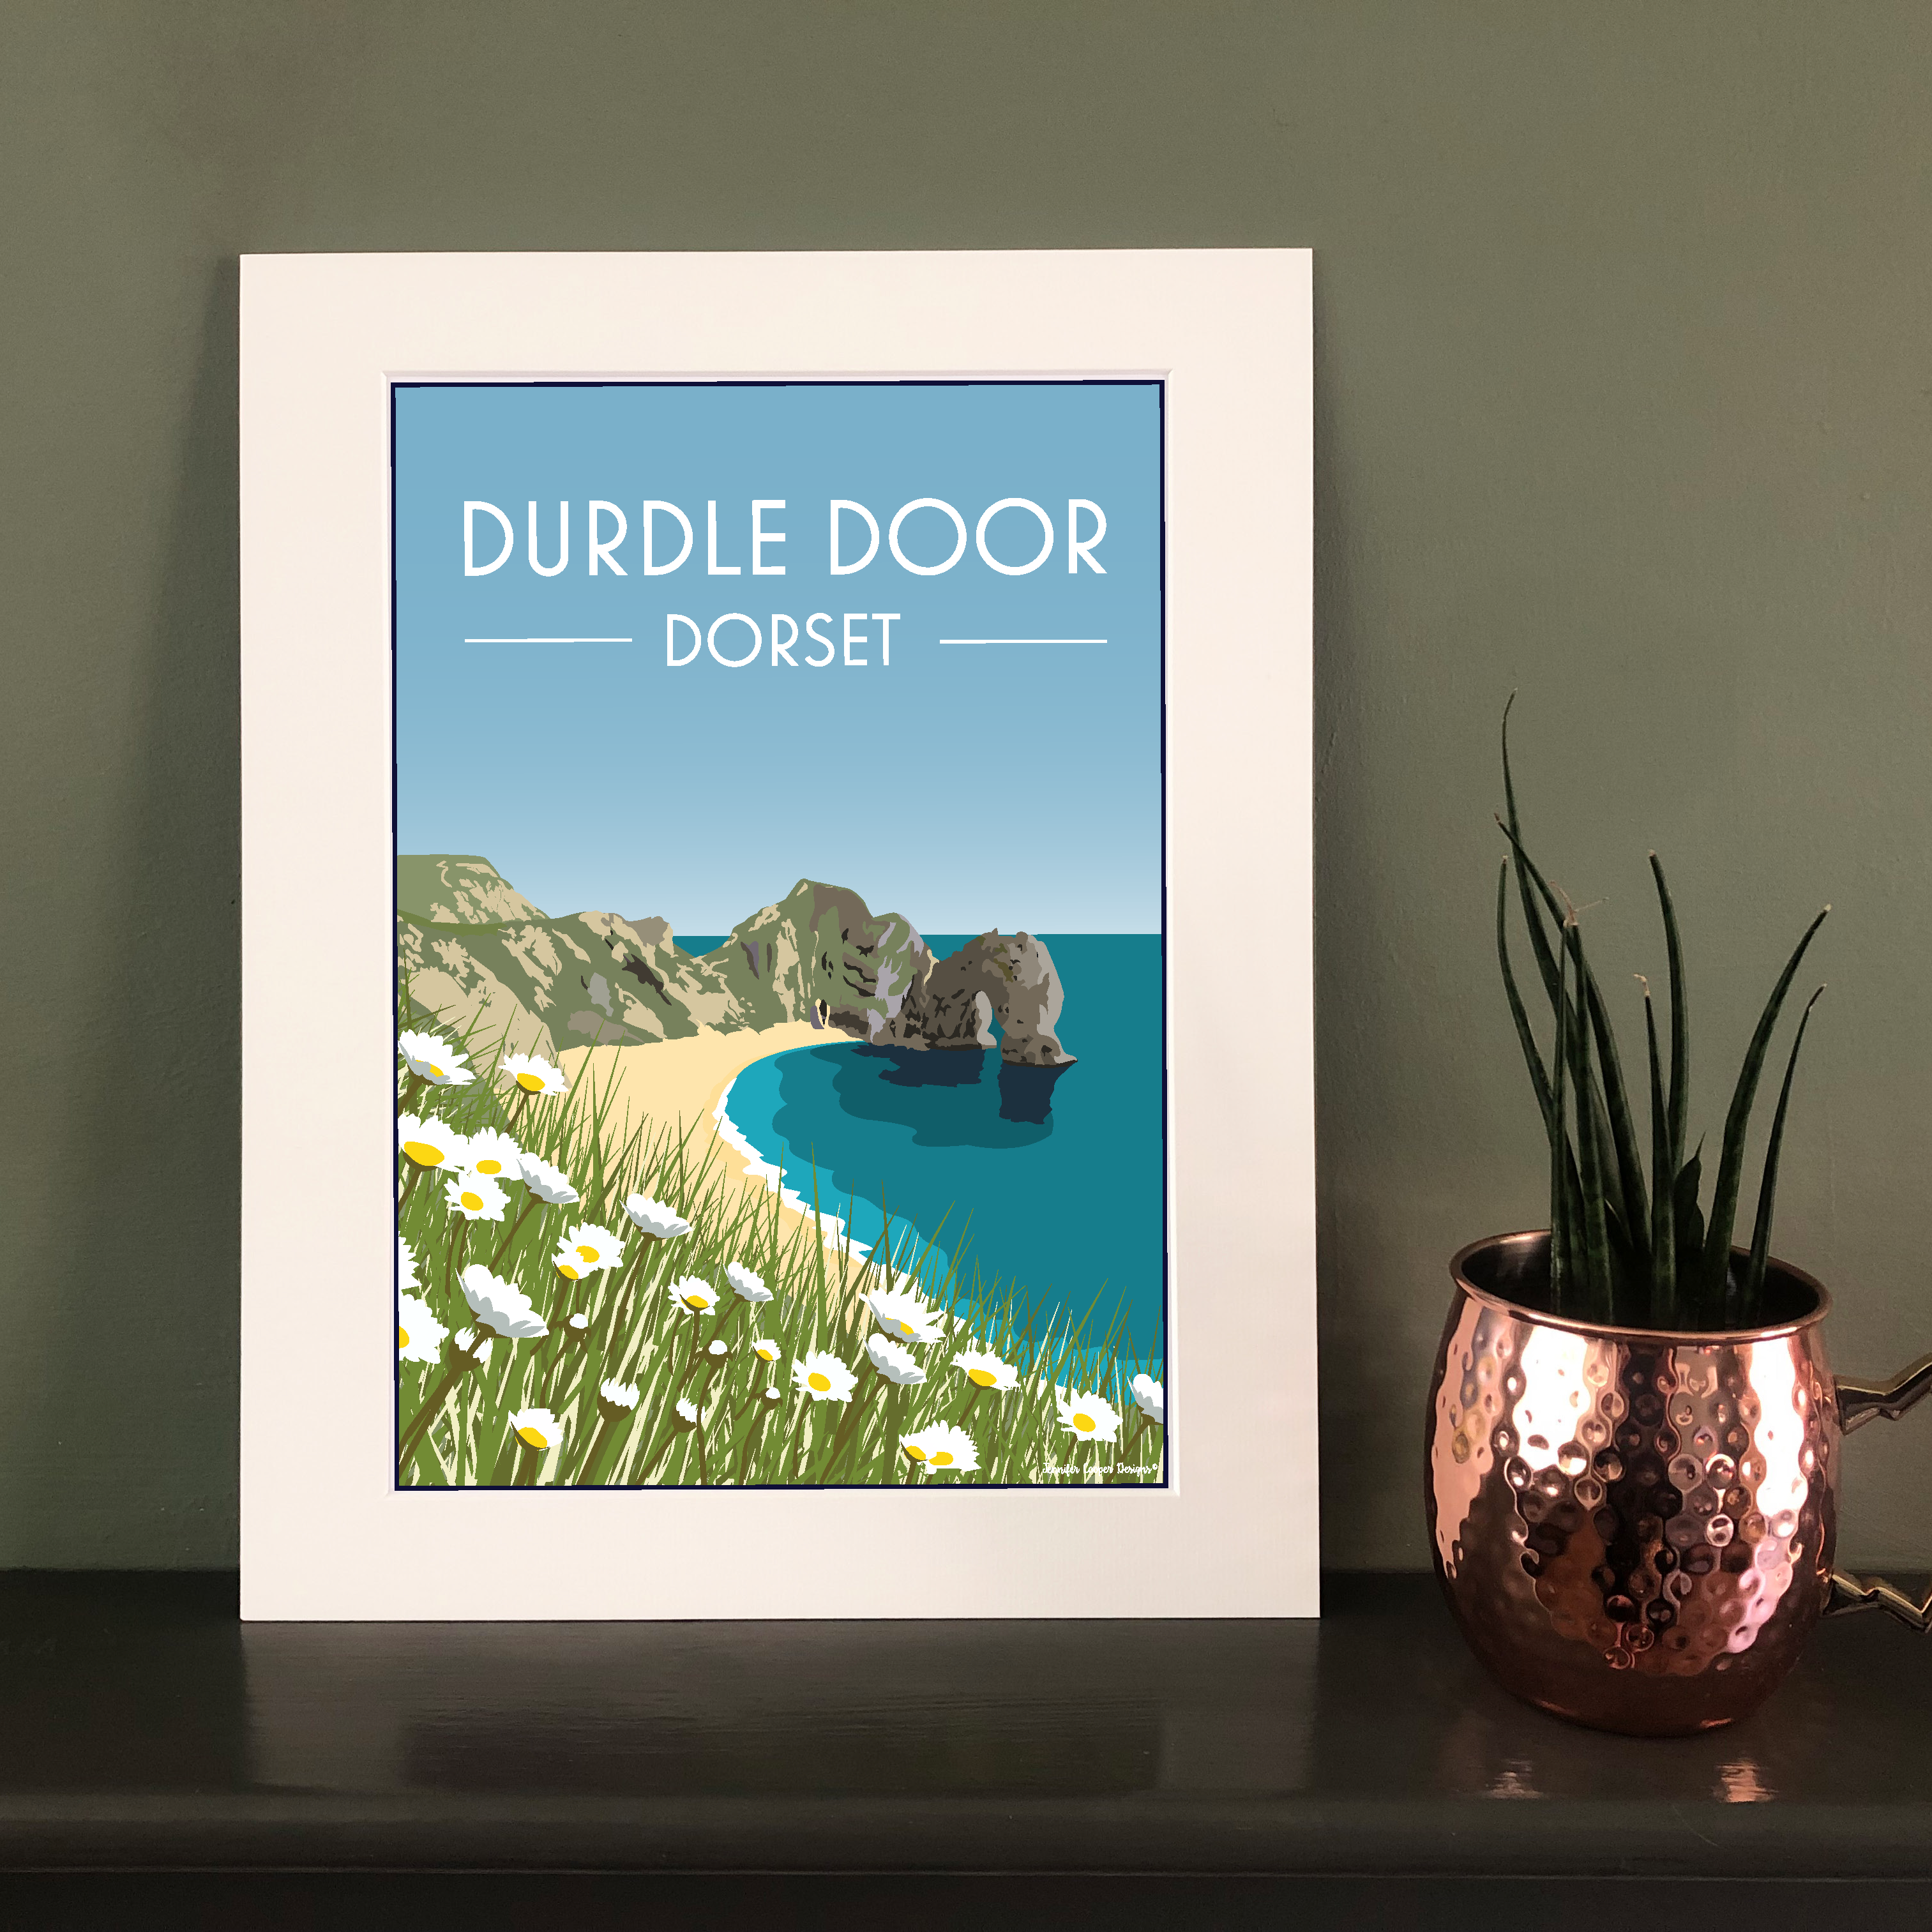 Durdle Door